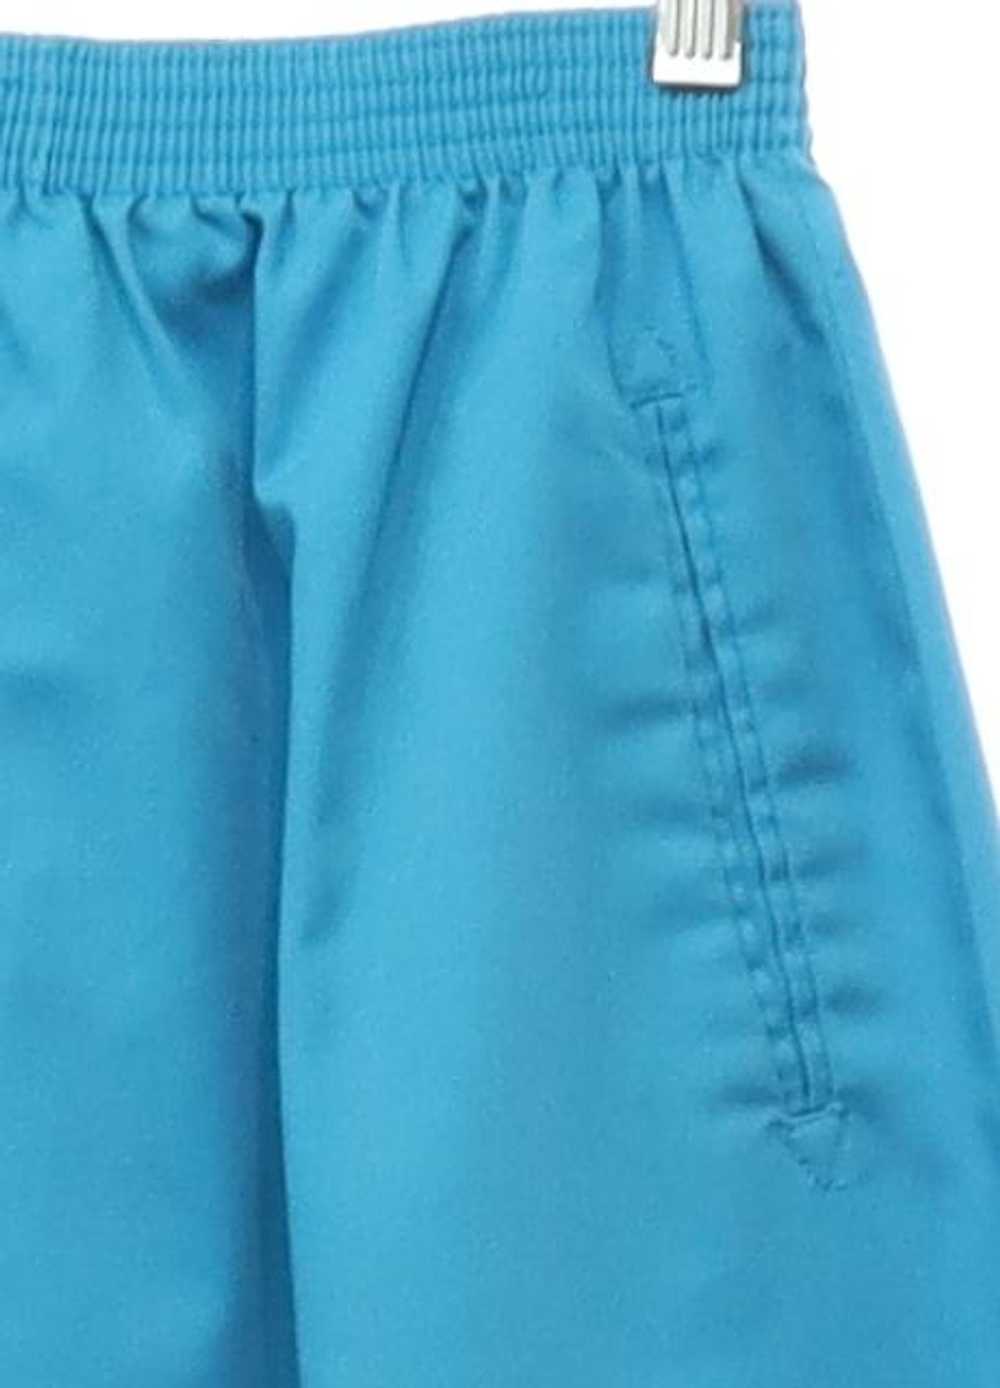 1980's Union Label Skirt - image 2